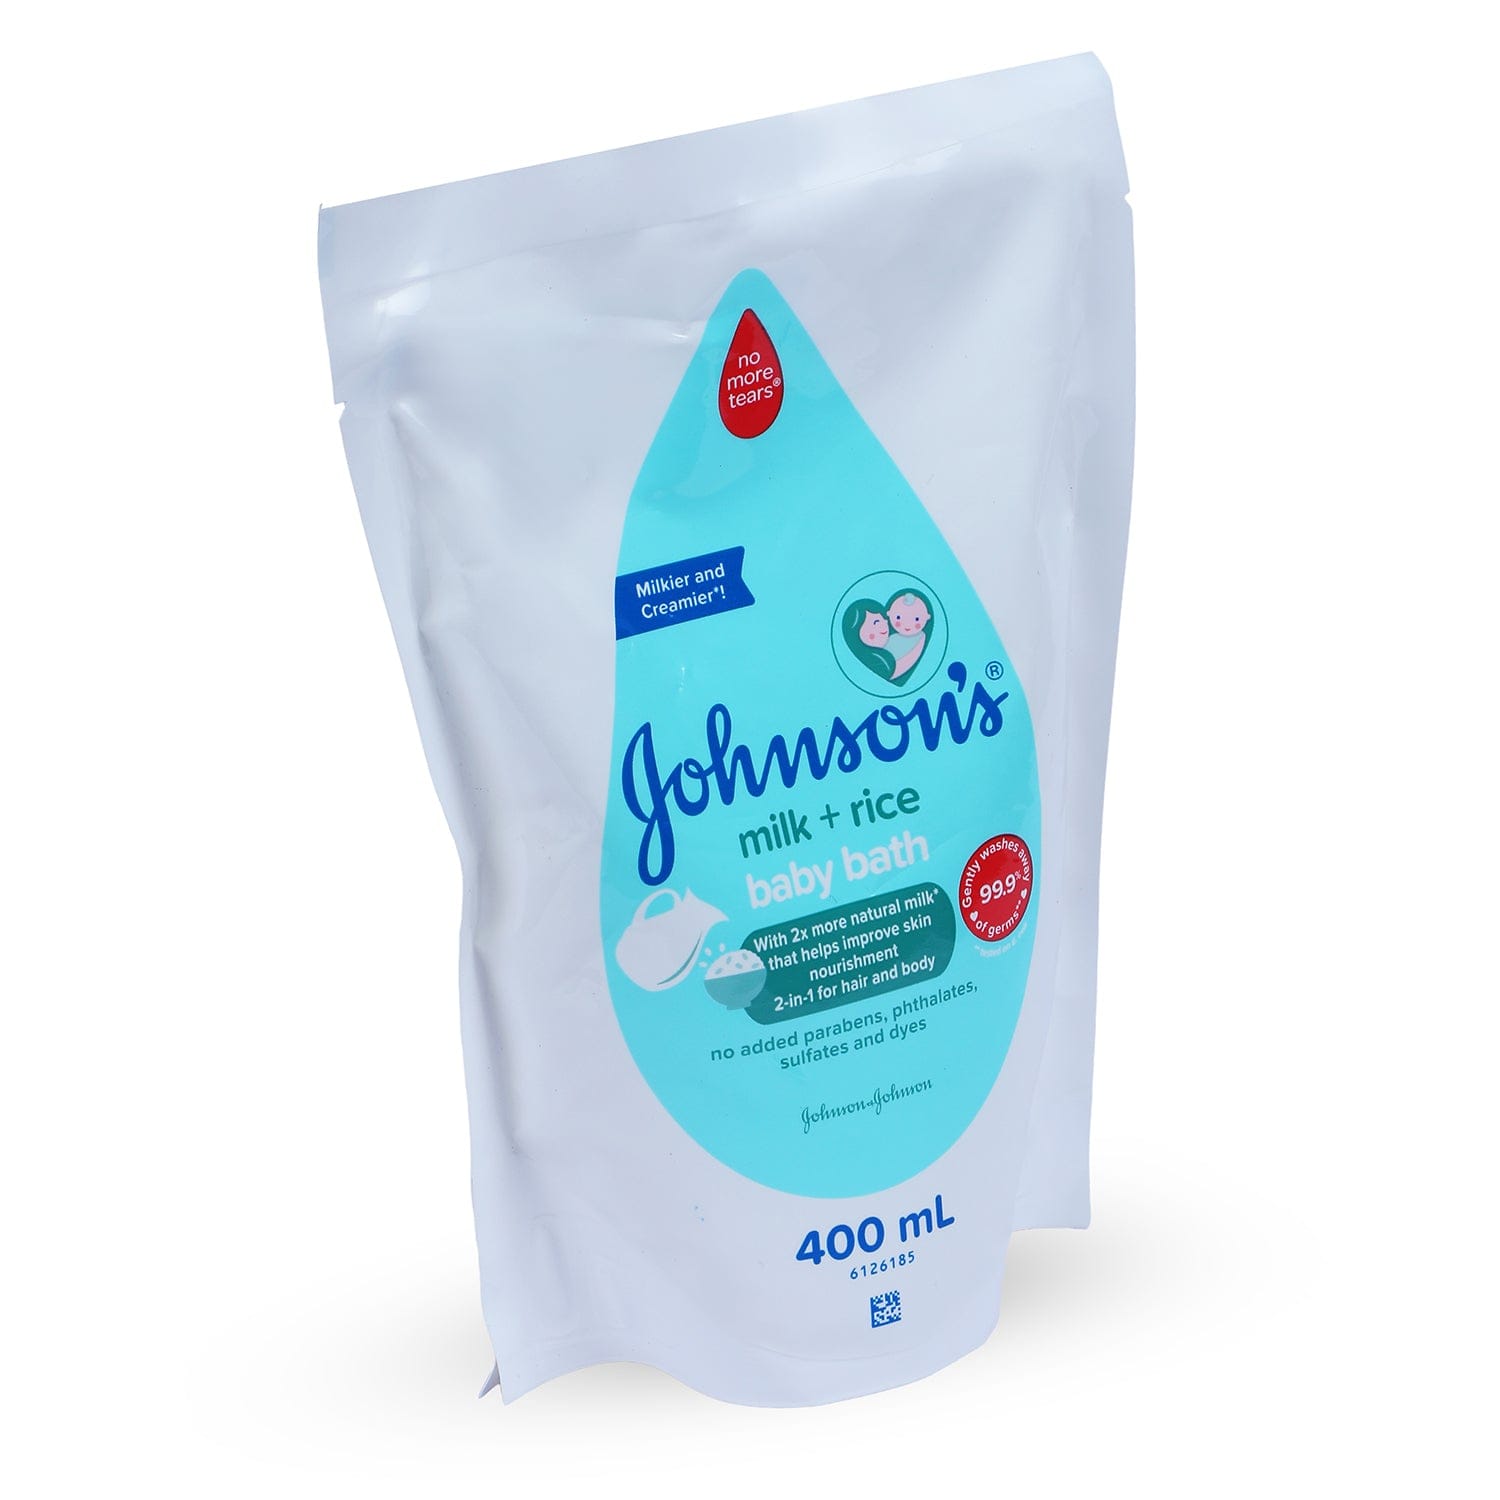 Johnson's Baby Bath Wash Milk + Rice Refil Value Pack Body Wash - 400 ml - Baby Moo